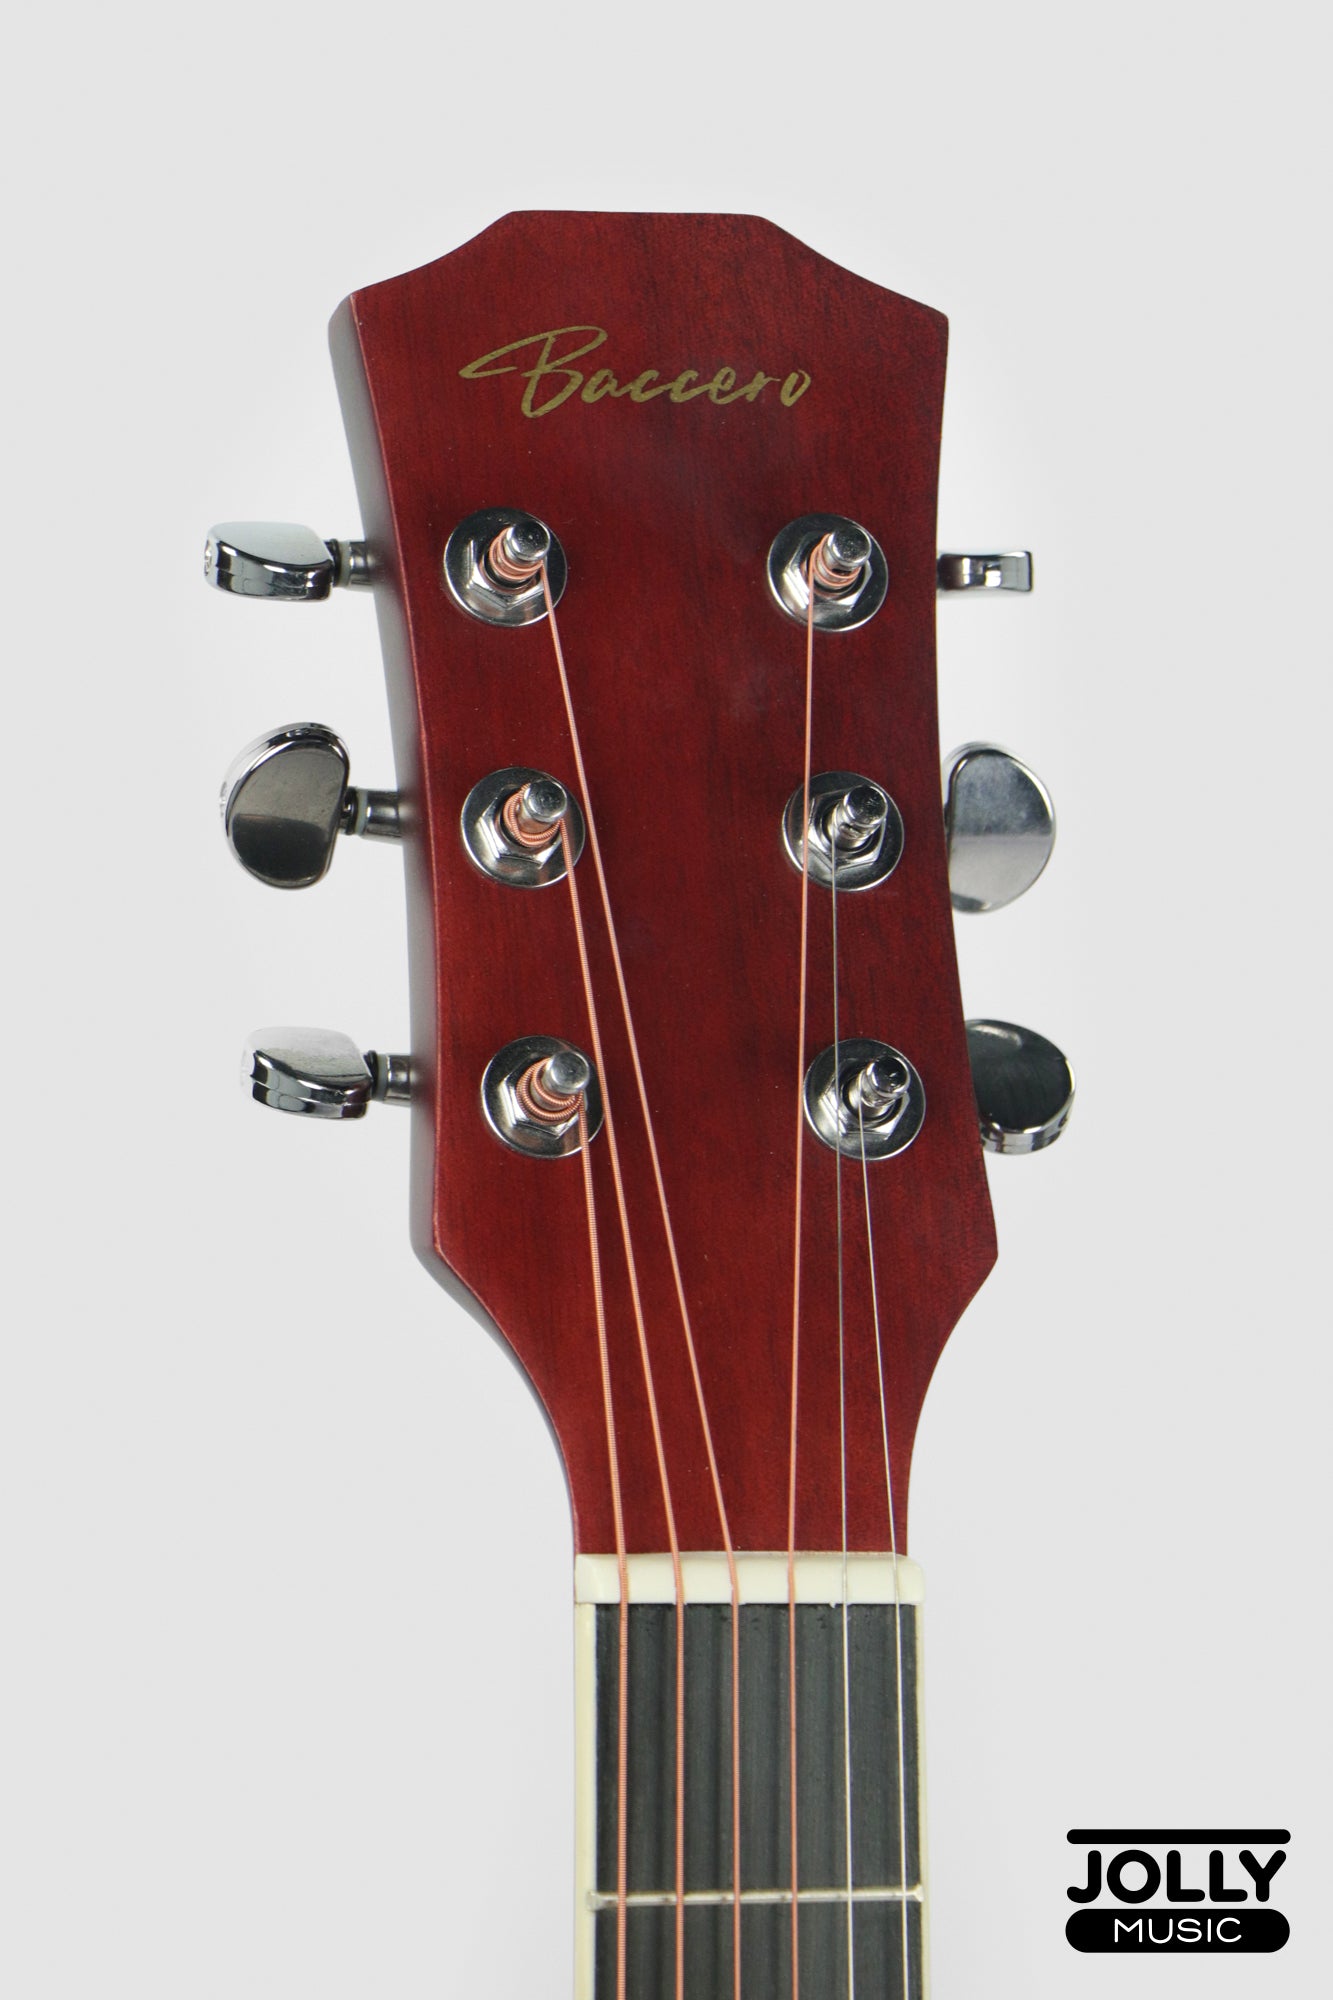 Baccero 41" Guitar KT-41Y Truss Rod w/ Case, 3 Picks, Tuner, Capo - Natural